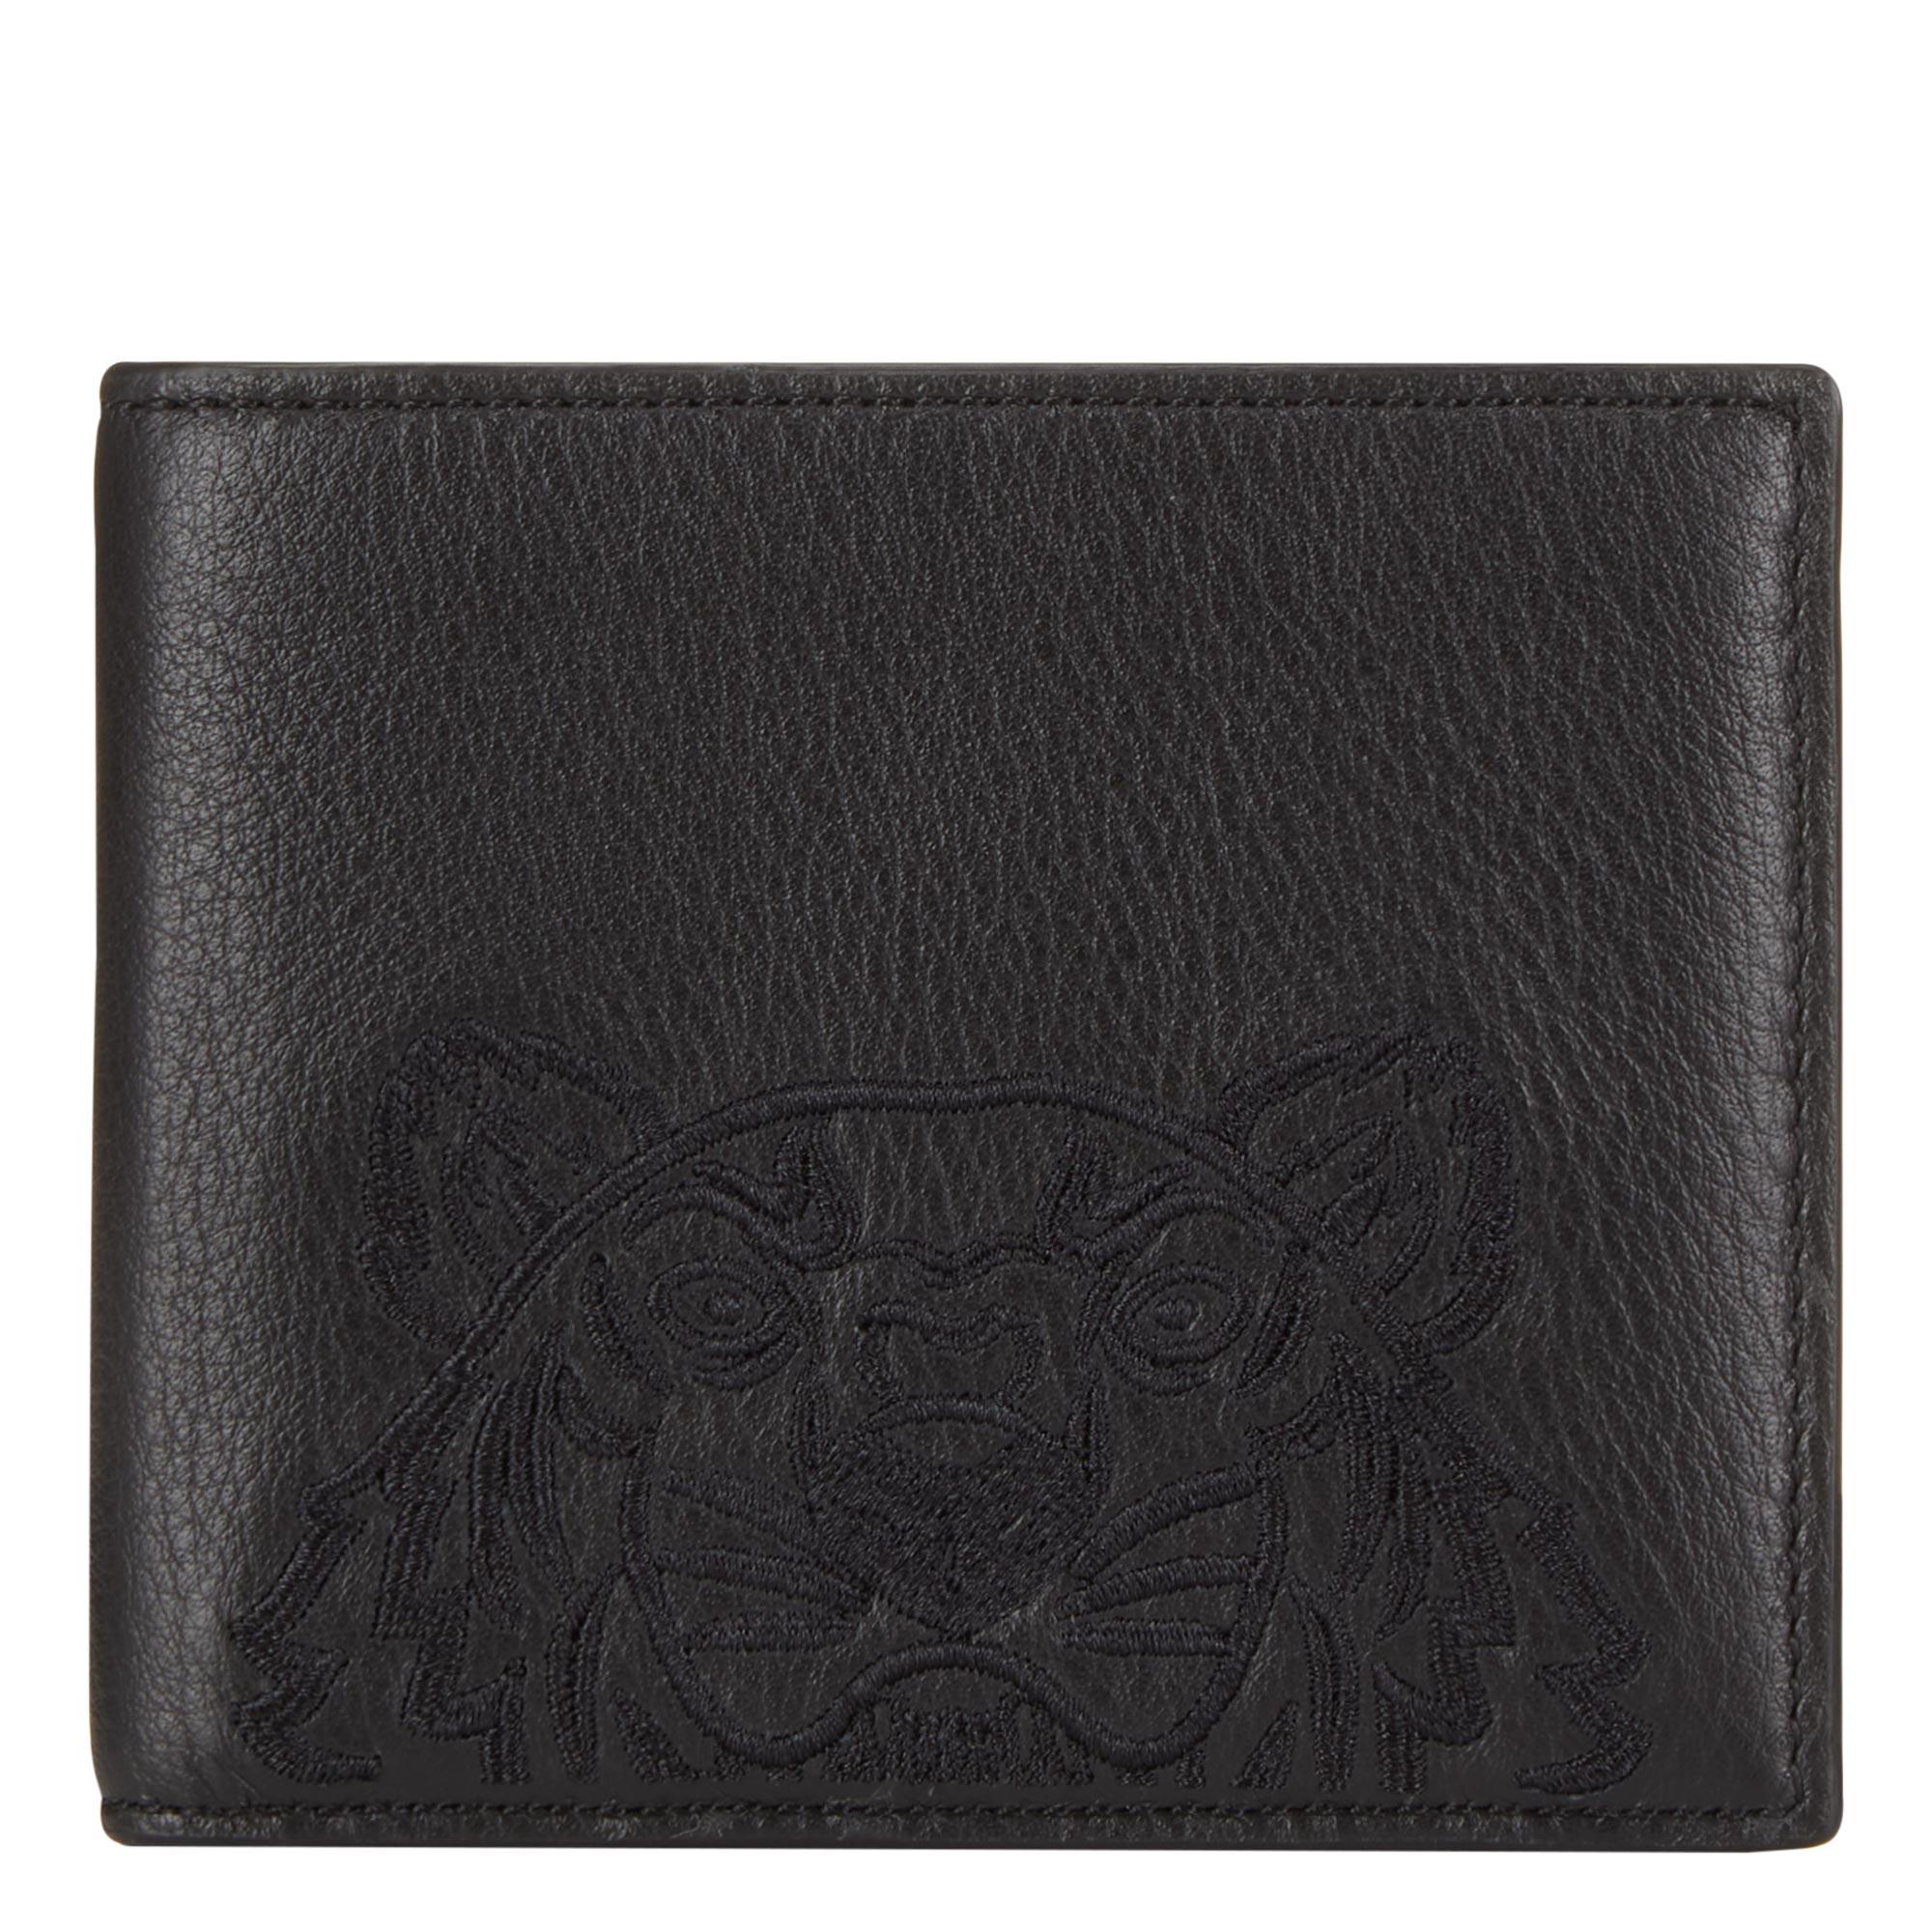 Kampus Leather Wallet